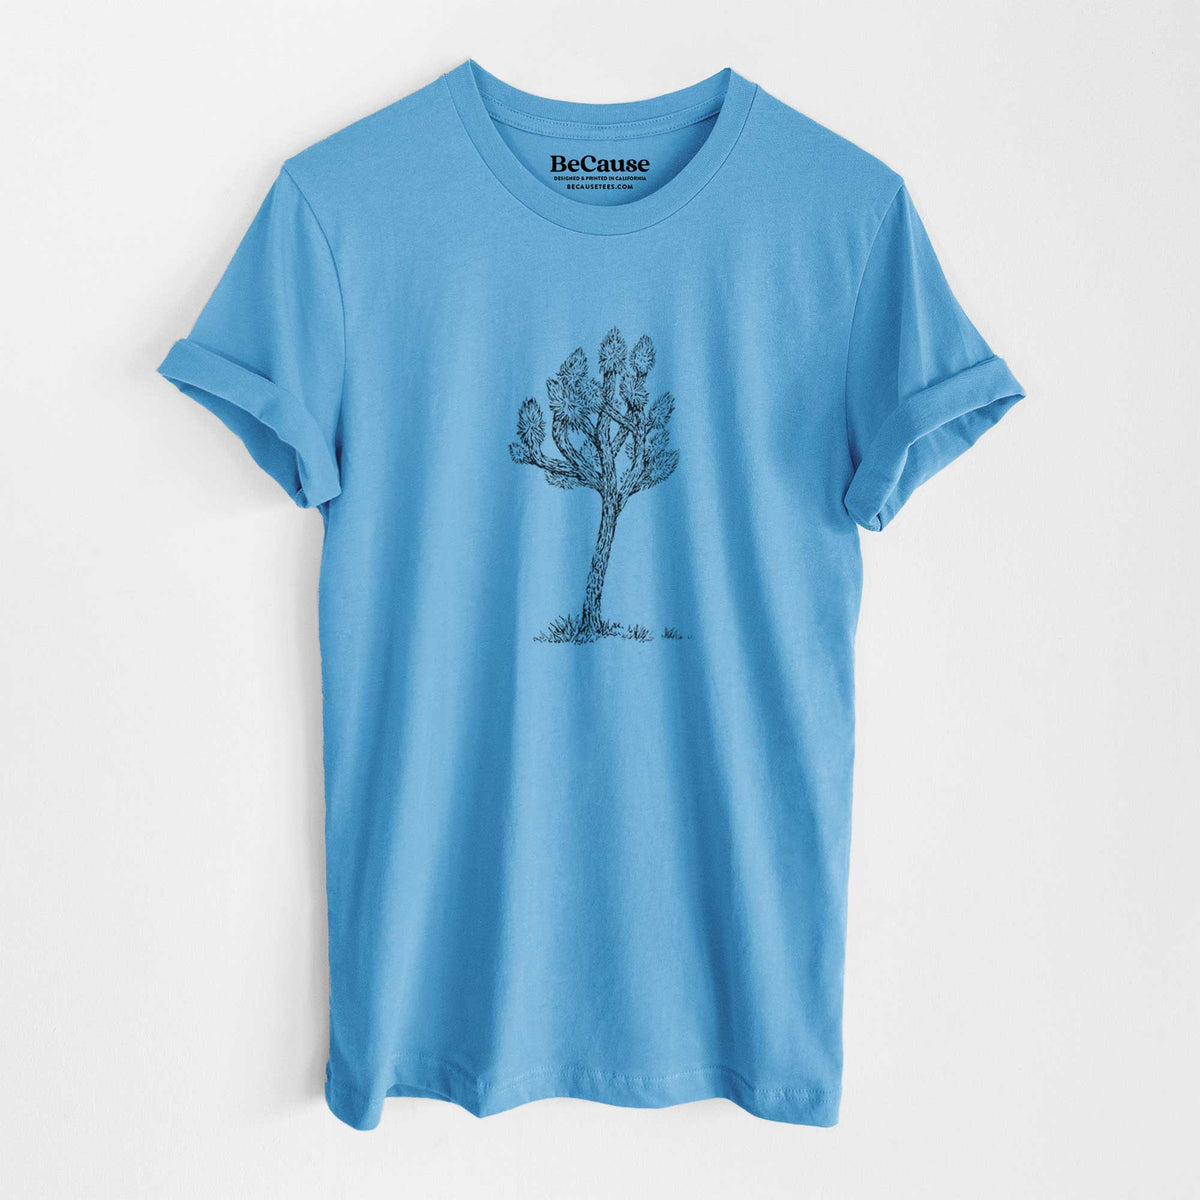 Yucca brevifolia - Joshua Tree - Lightweight 100% Cotton Unisex Crewneck